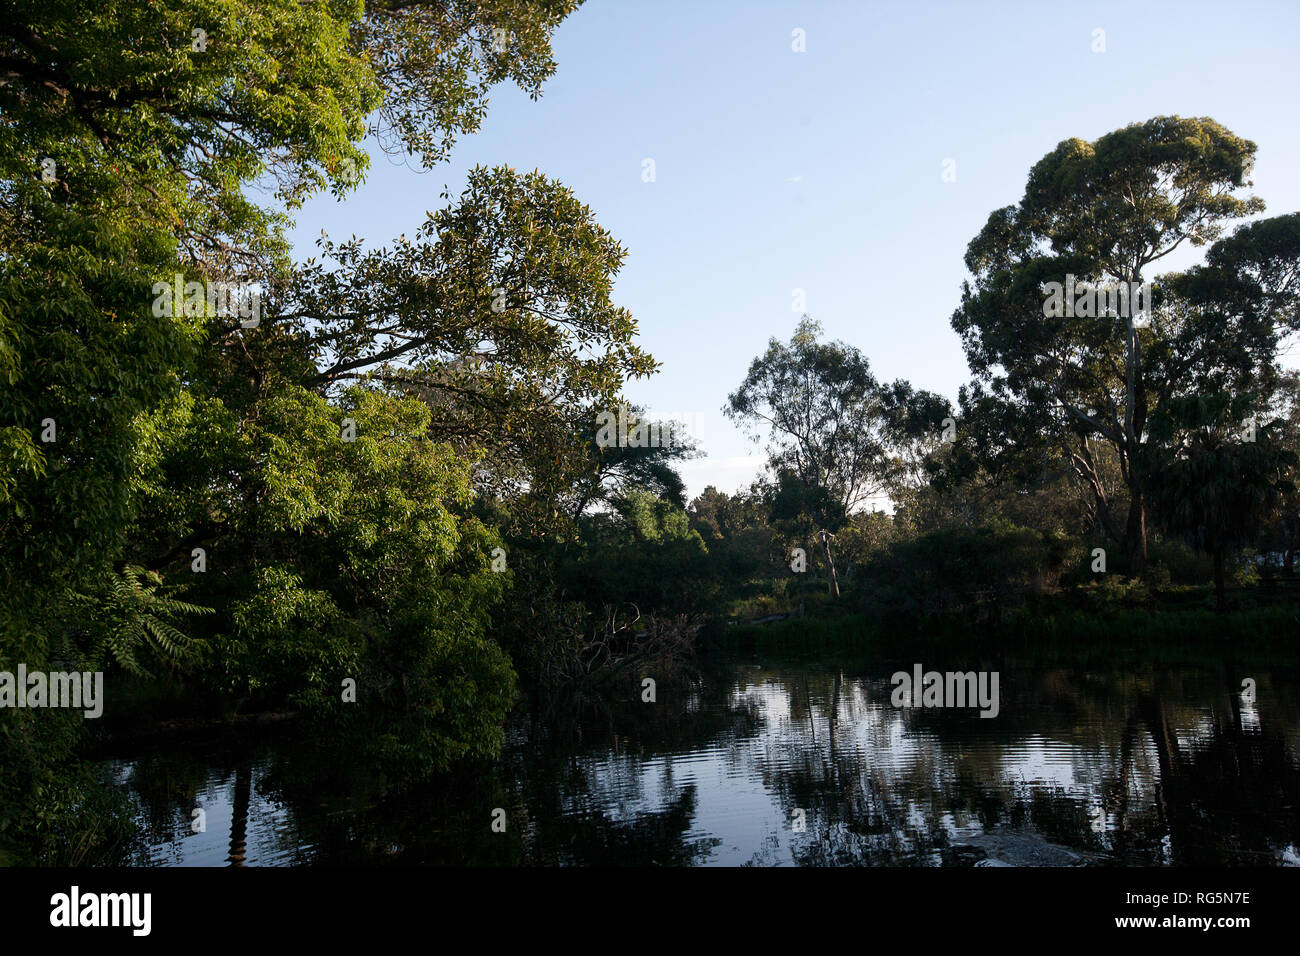 Billabong lake in Victoria, Australia Stock Photo - Alamy